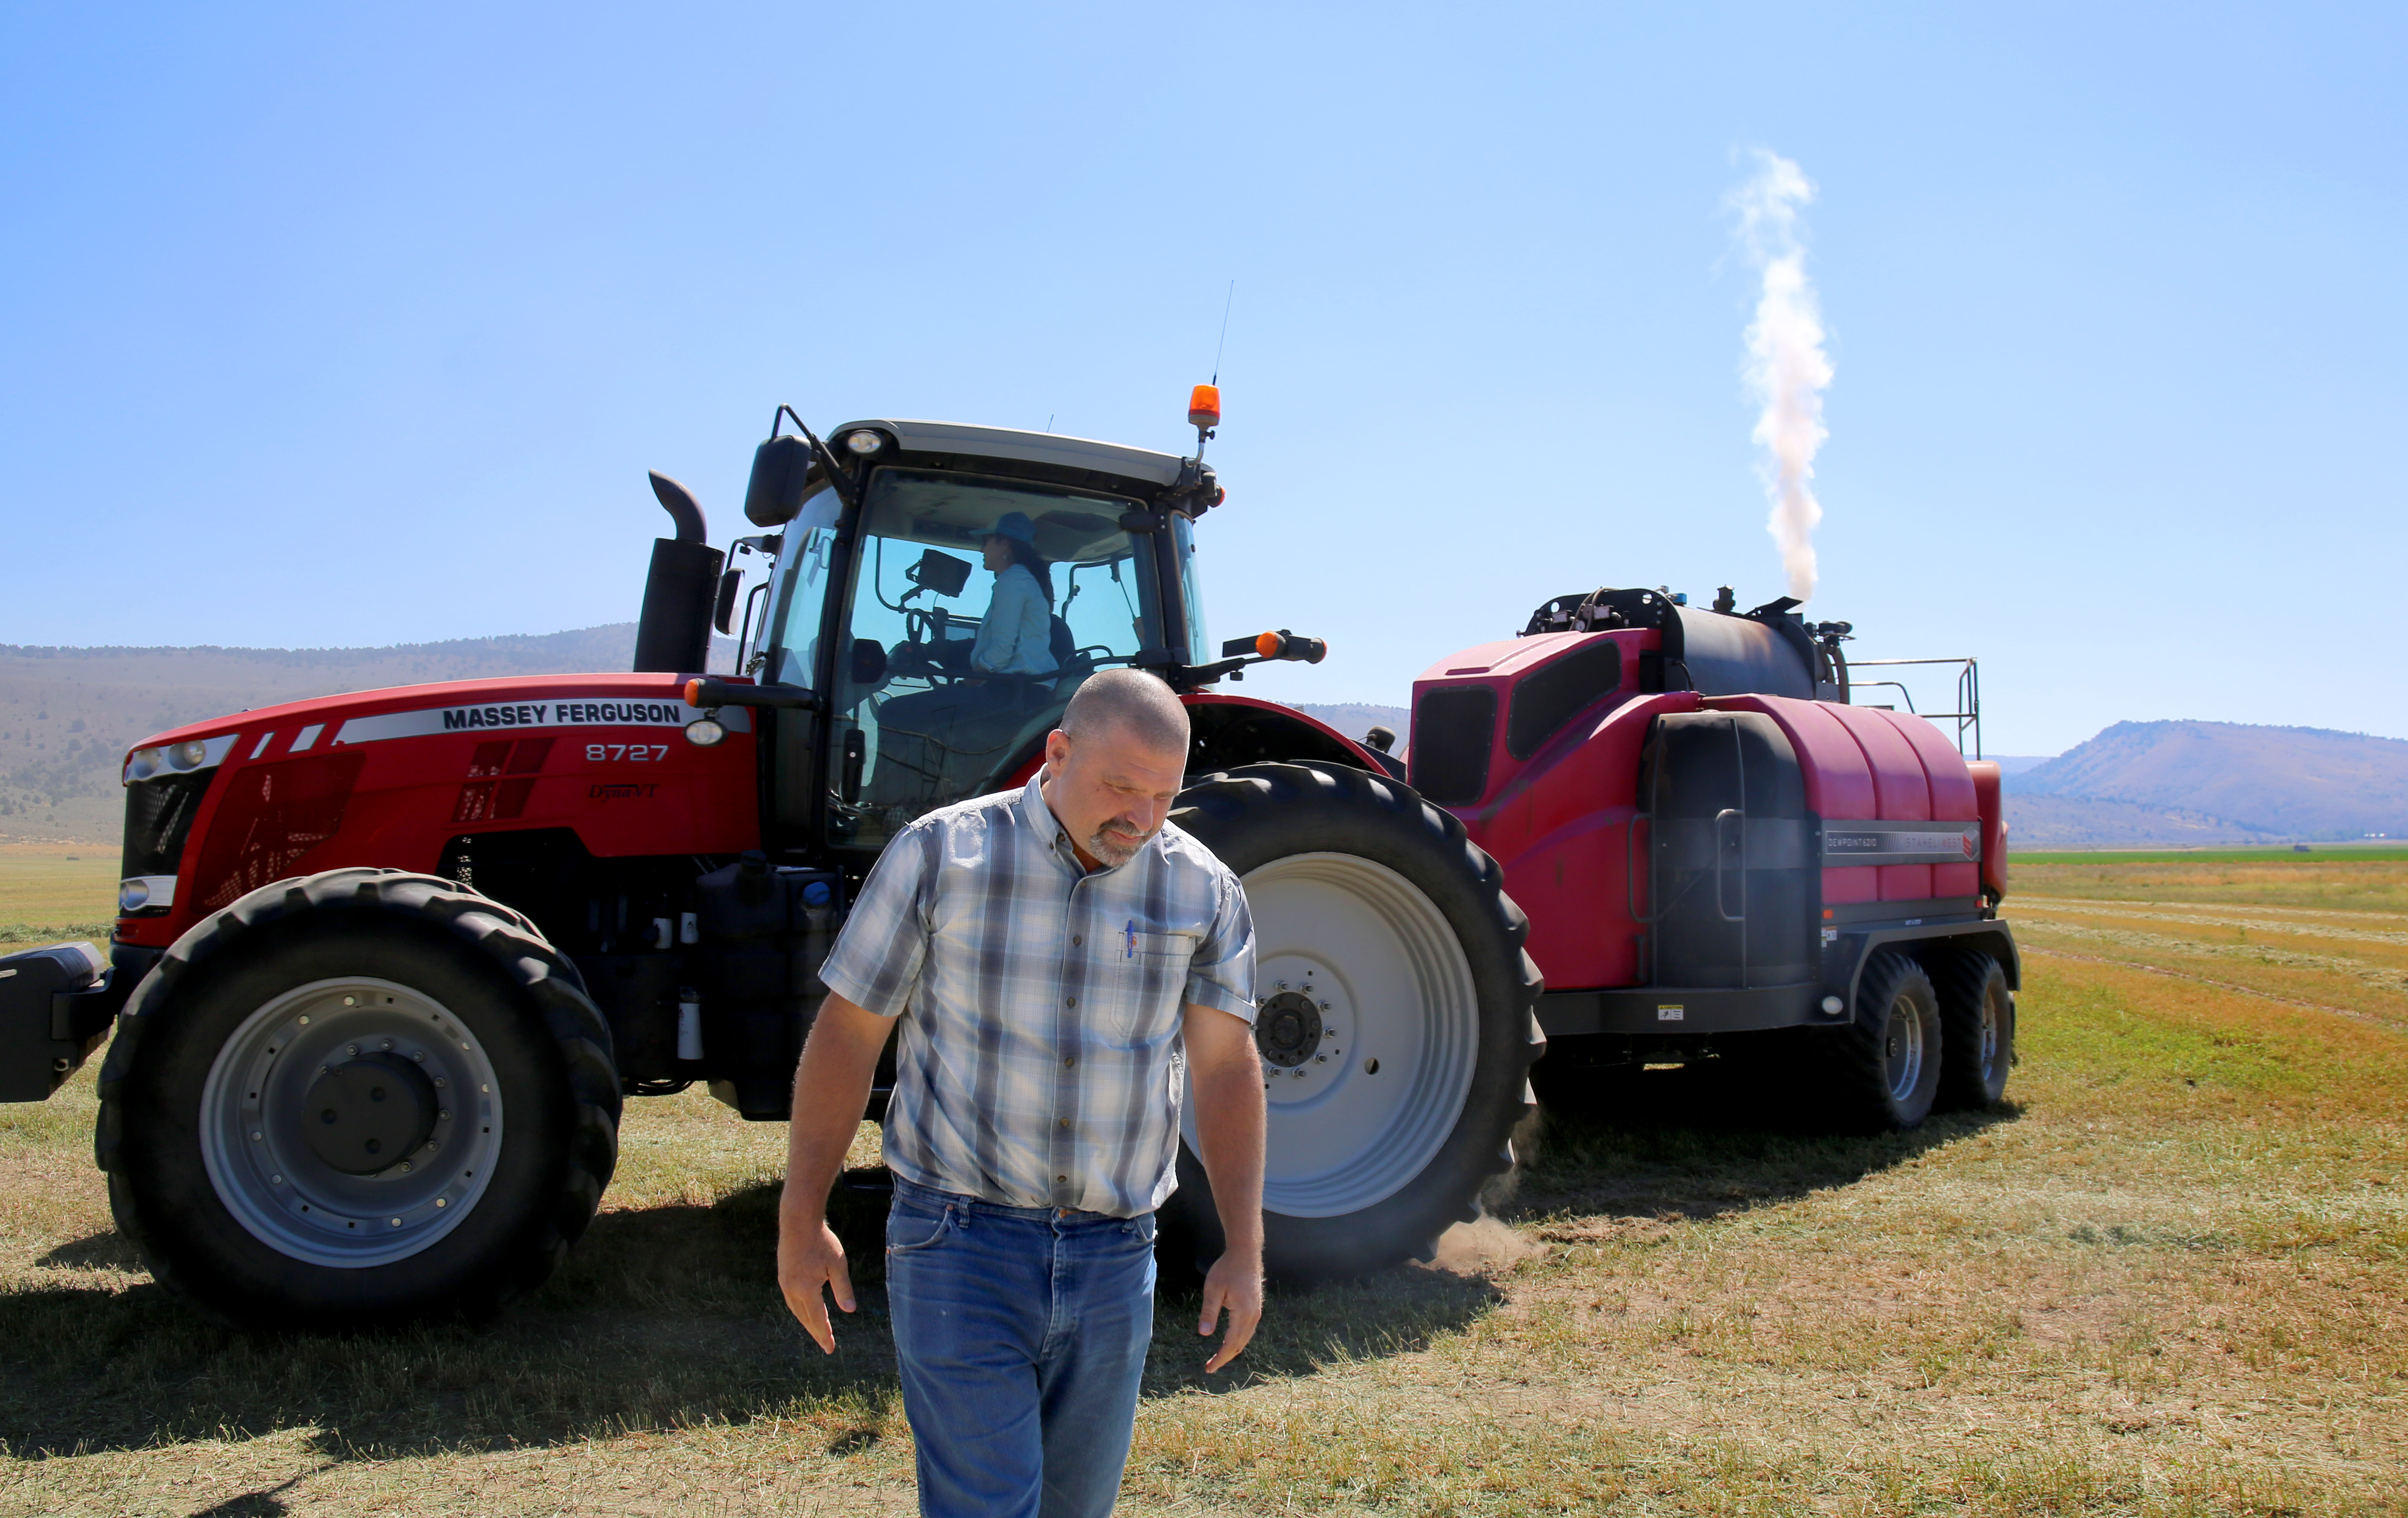 16-Month Calendar Includes September 2018 through December 2019 Classic Farm Tractors 2019